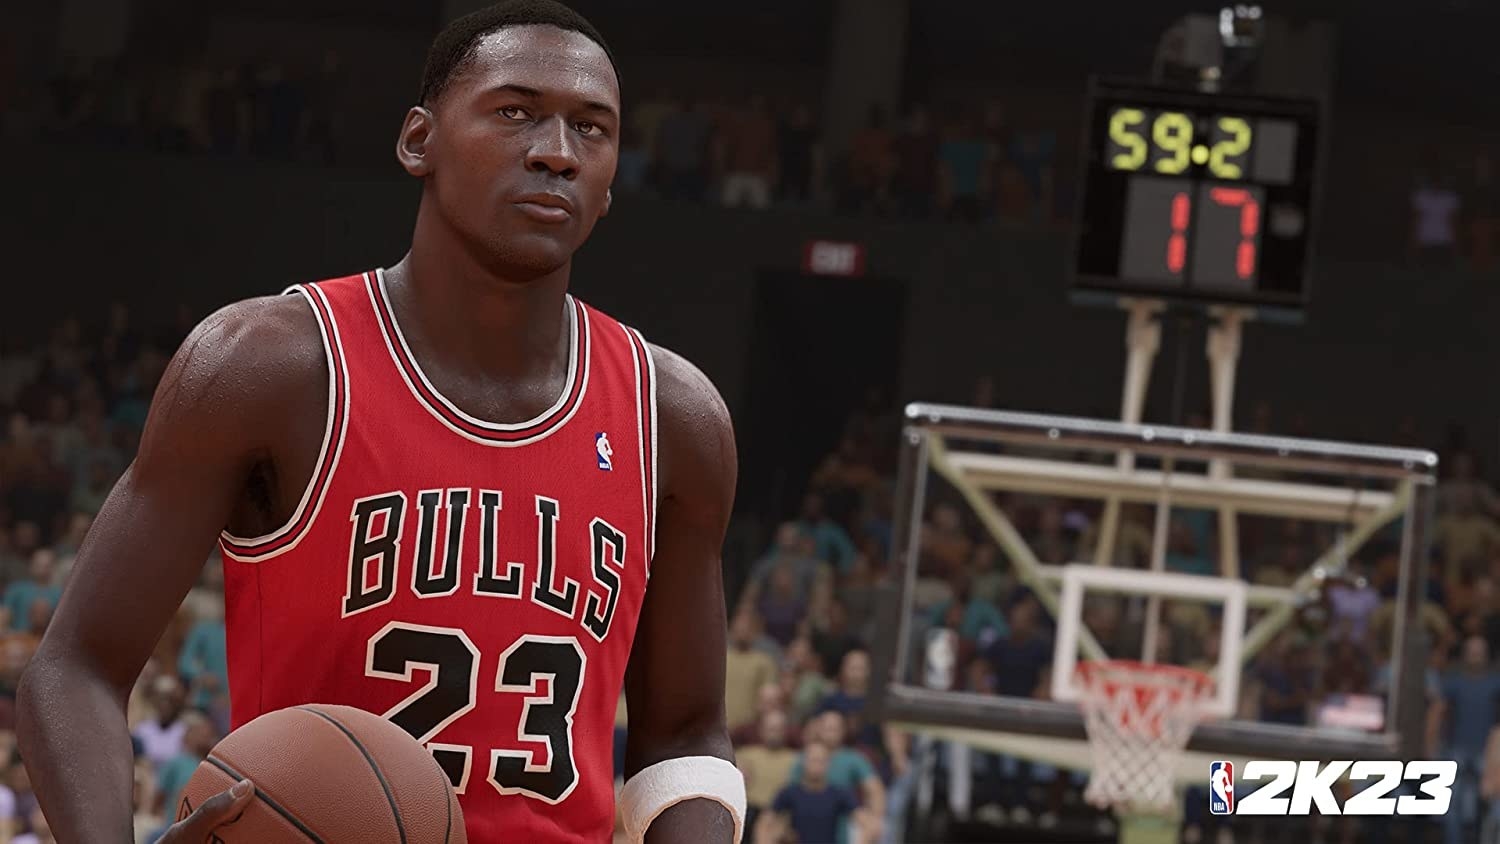 Michael Jordan wearing a Bulls jersey on court